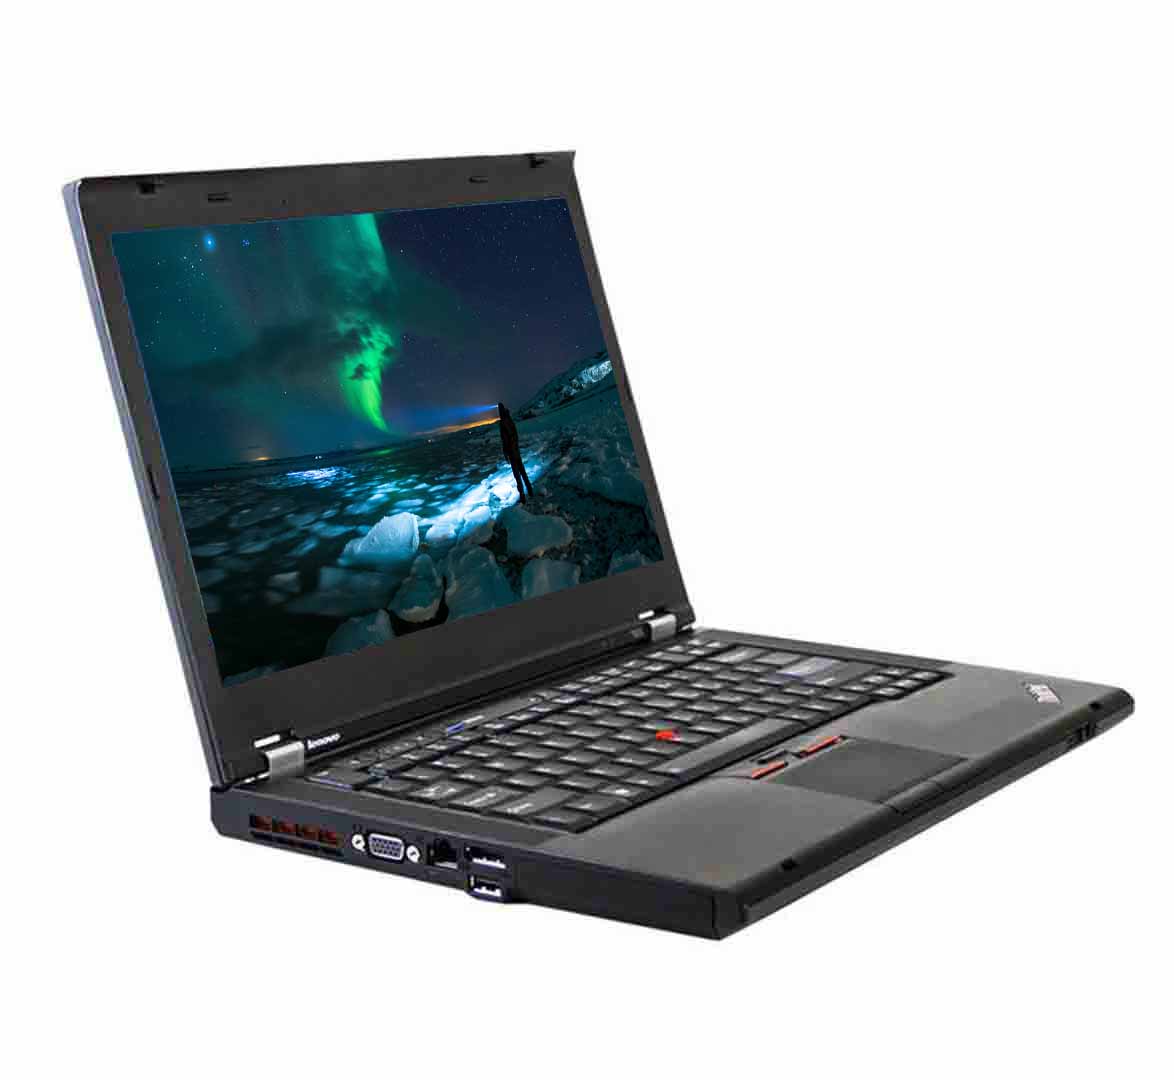 Lenovo ThinkPad T420s Business Laptop, Intel Core i5-2nd Generation CPU, 8GB RAM, 320GB HDD, 14 inch Display, Windows 10 Pro